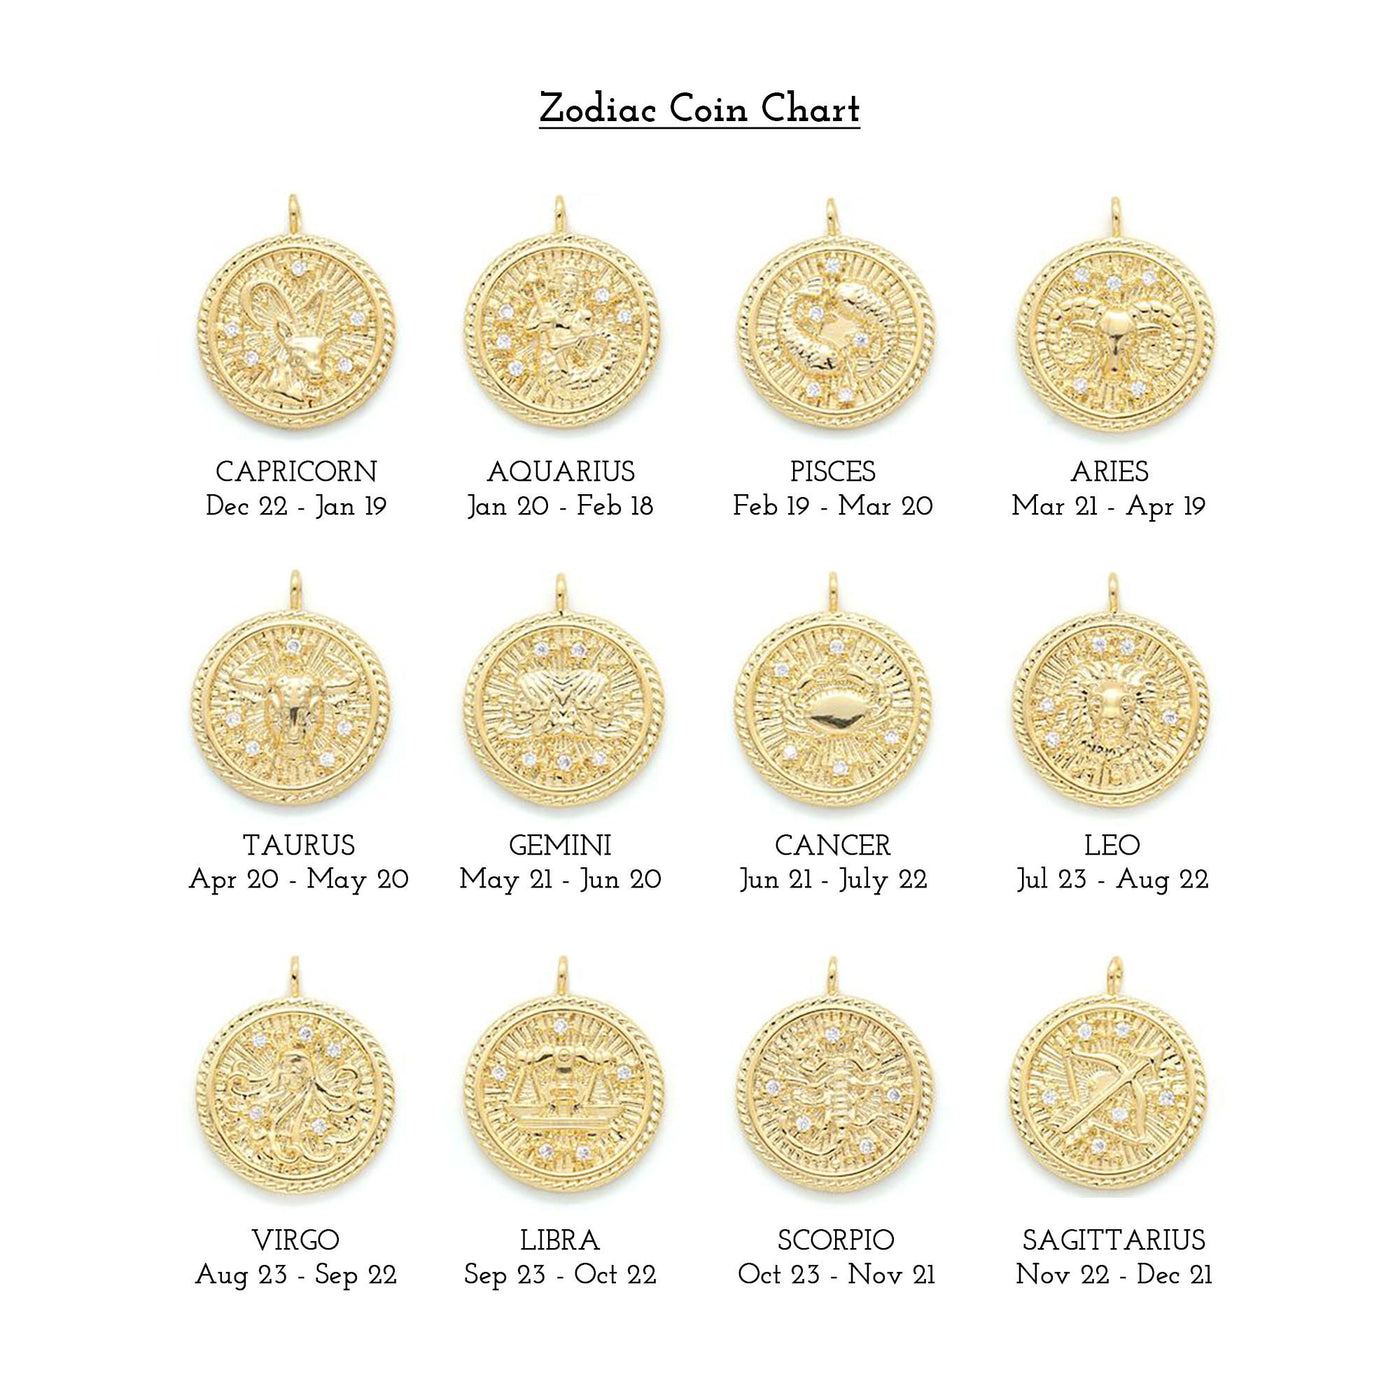 Aquarius Diamond & Guilloché Zodiac Pendant Necklace